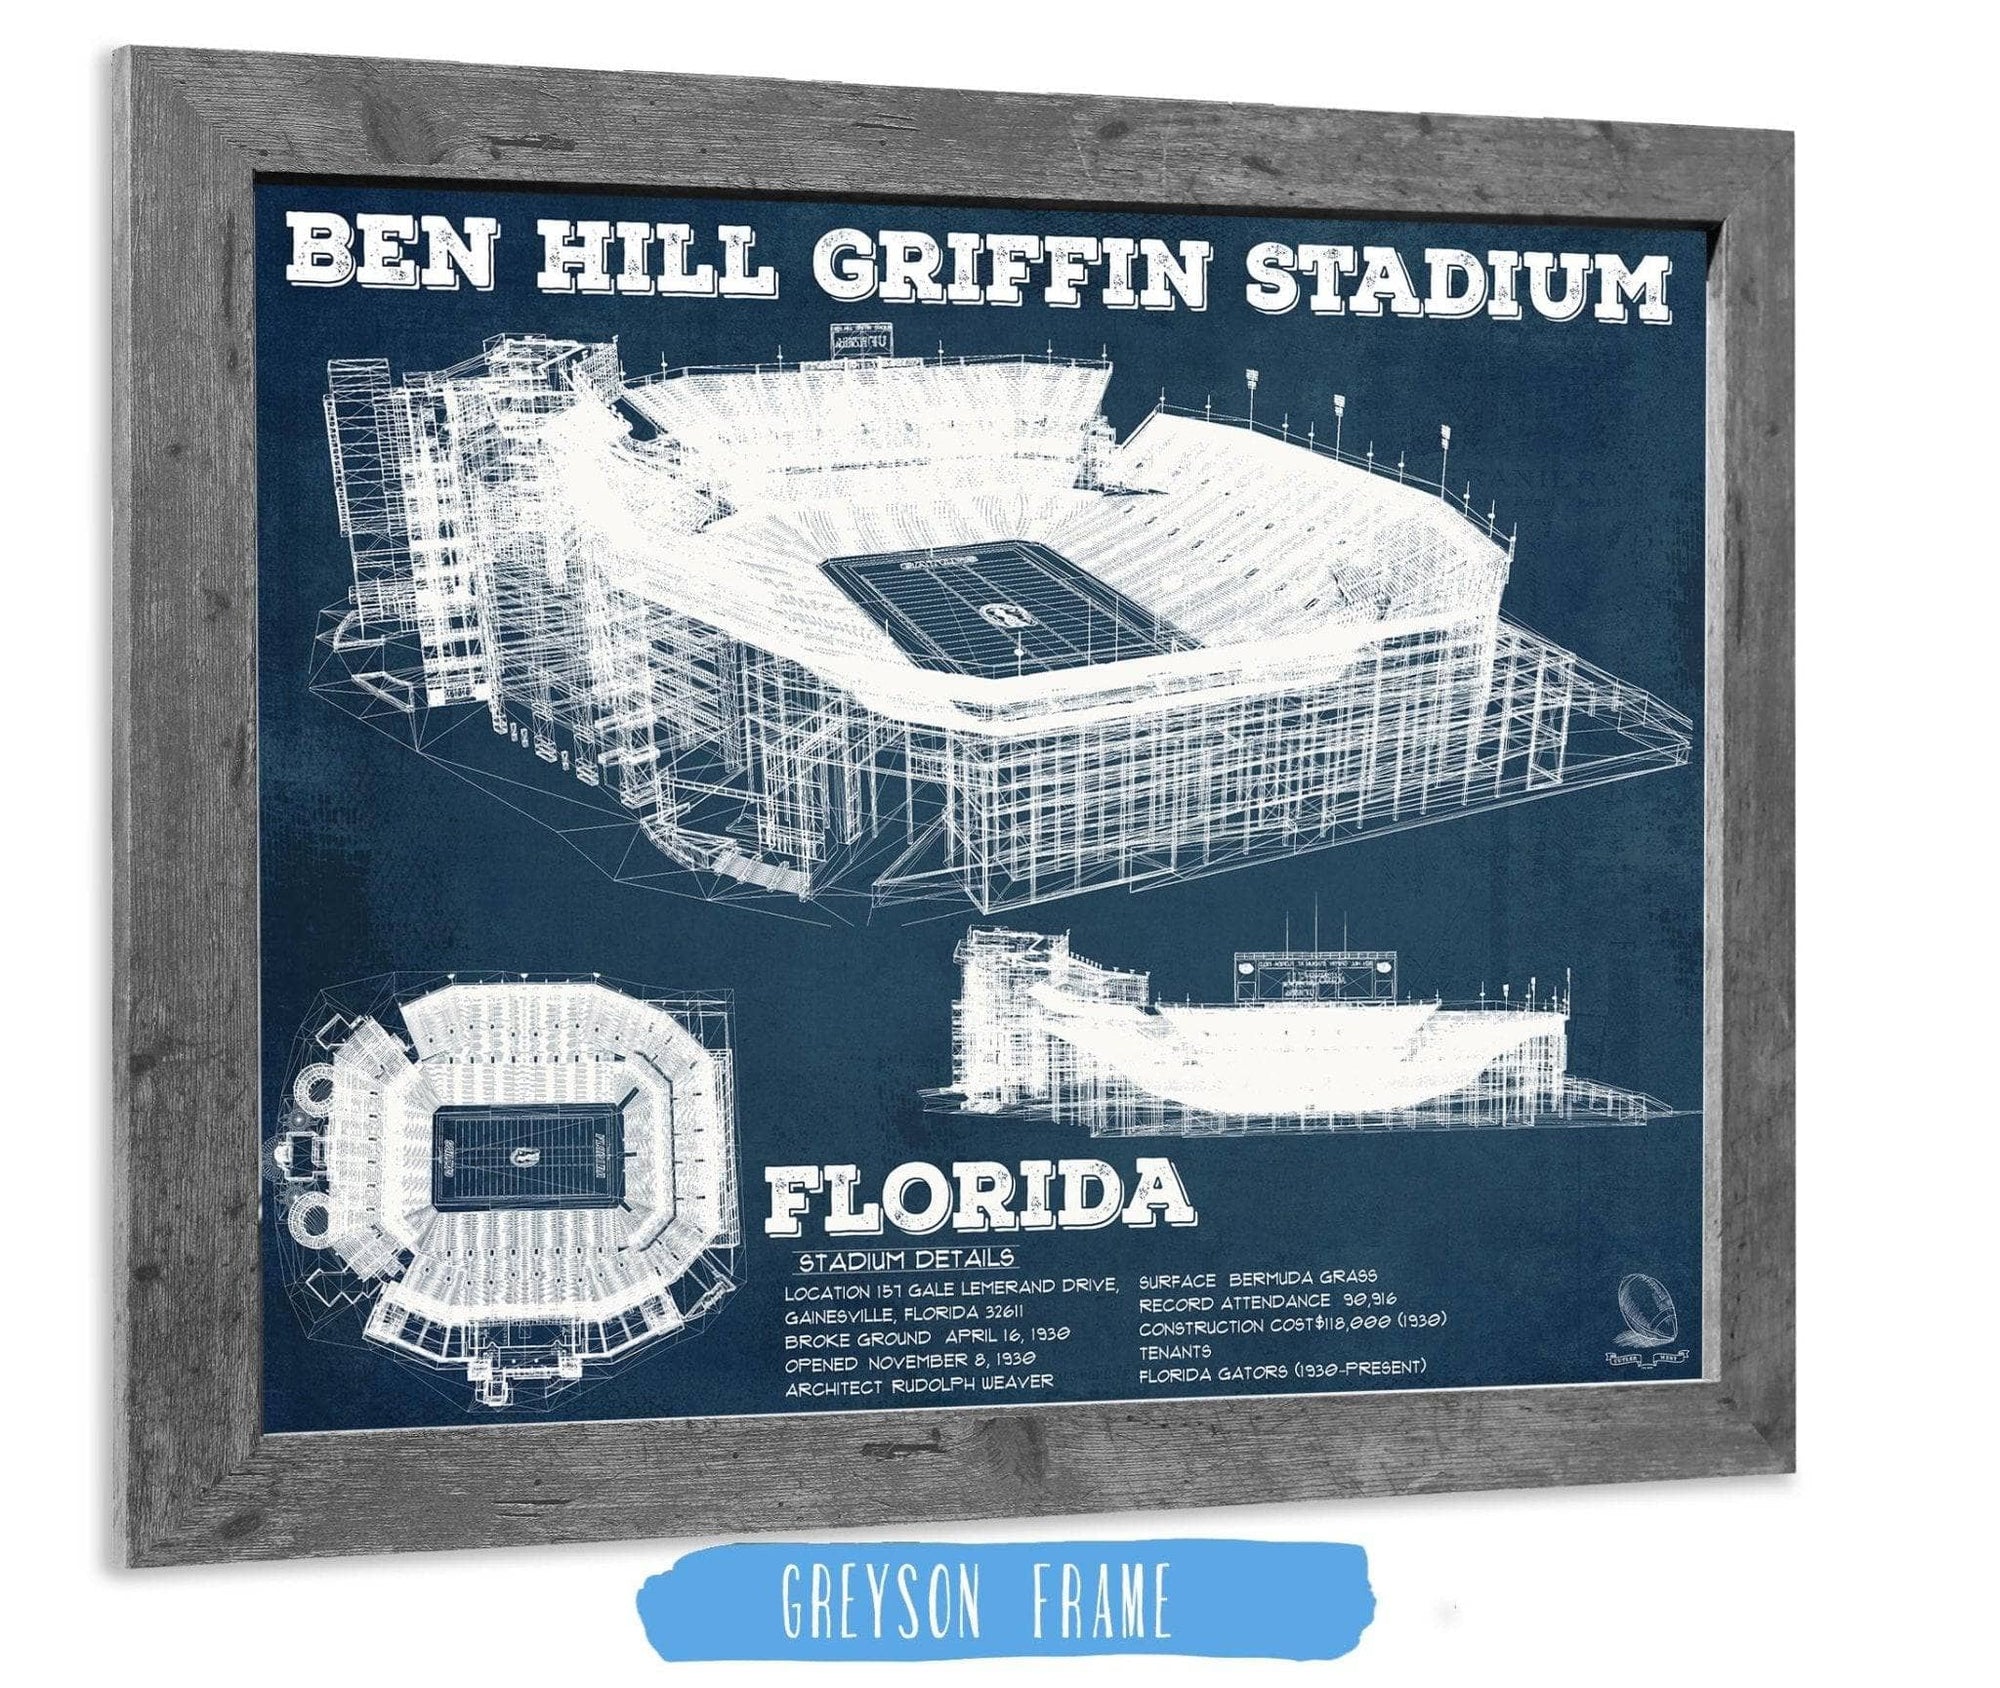 Cutler West Best Selling Collection 14" x 11" / Greyson Frame Ben Hill Griffin Stadium Art - University of Florida Gators Vintage Stadium & Blueprint Art Print 736879125_60162